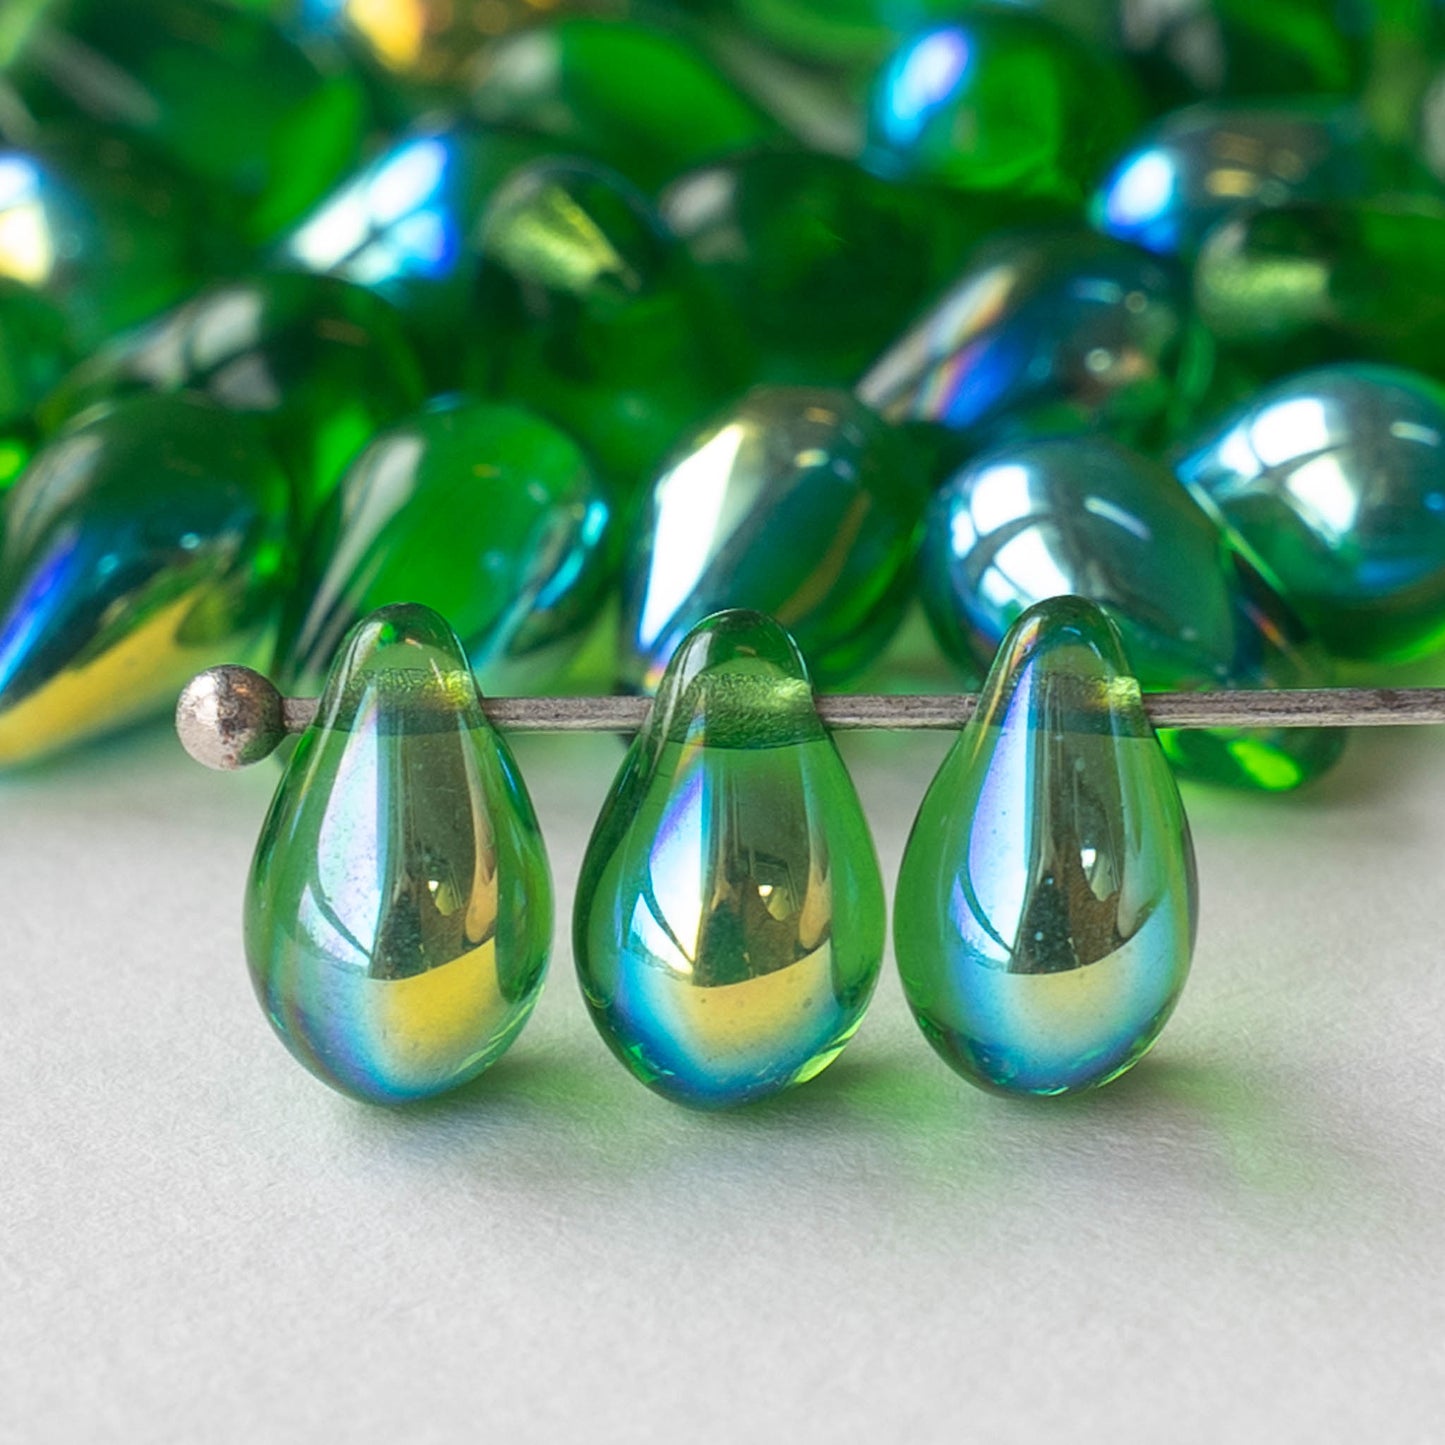 6x9mm Glass Teardrop Beads - Emerald Green AB - 50 Beads